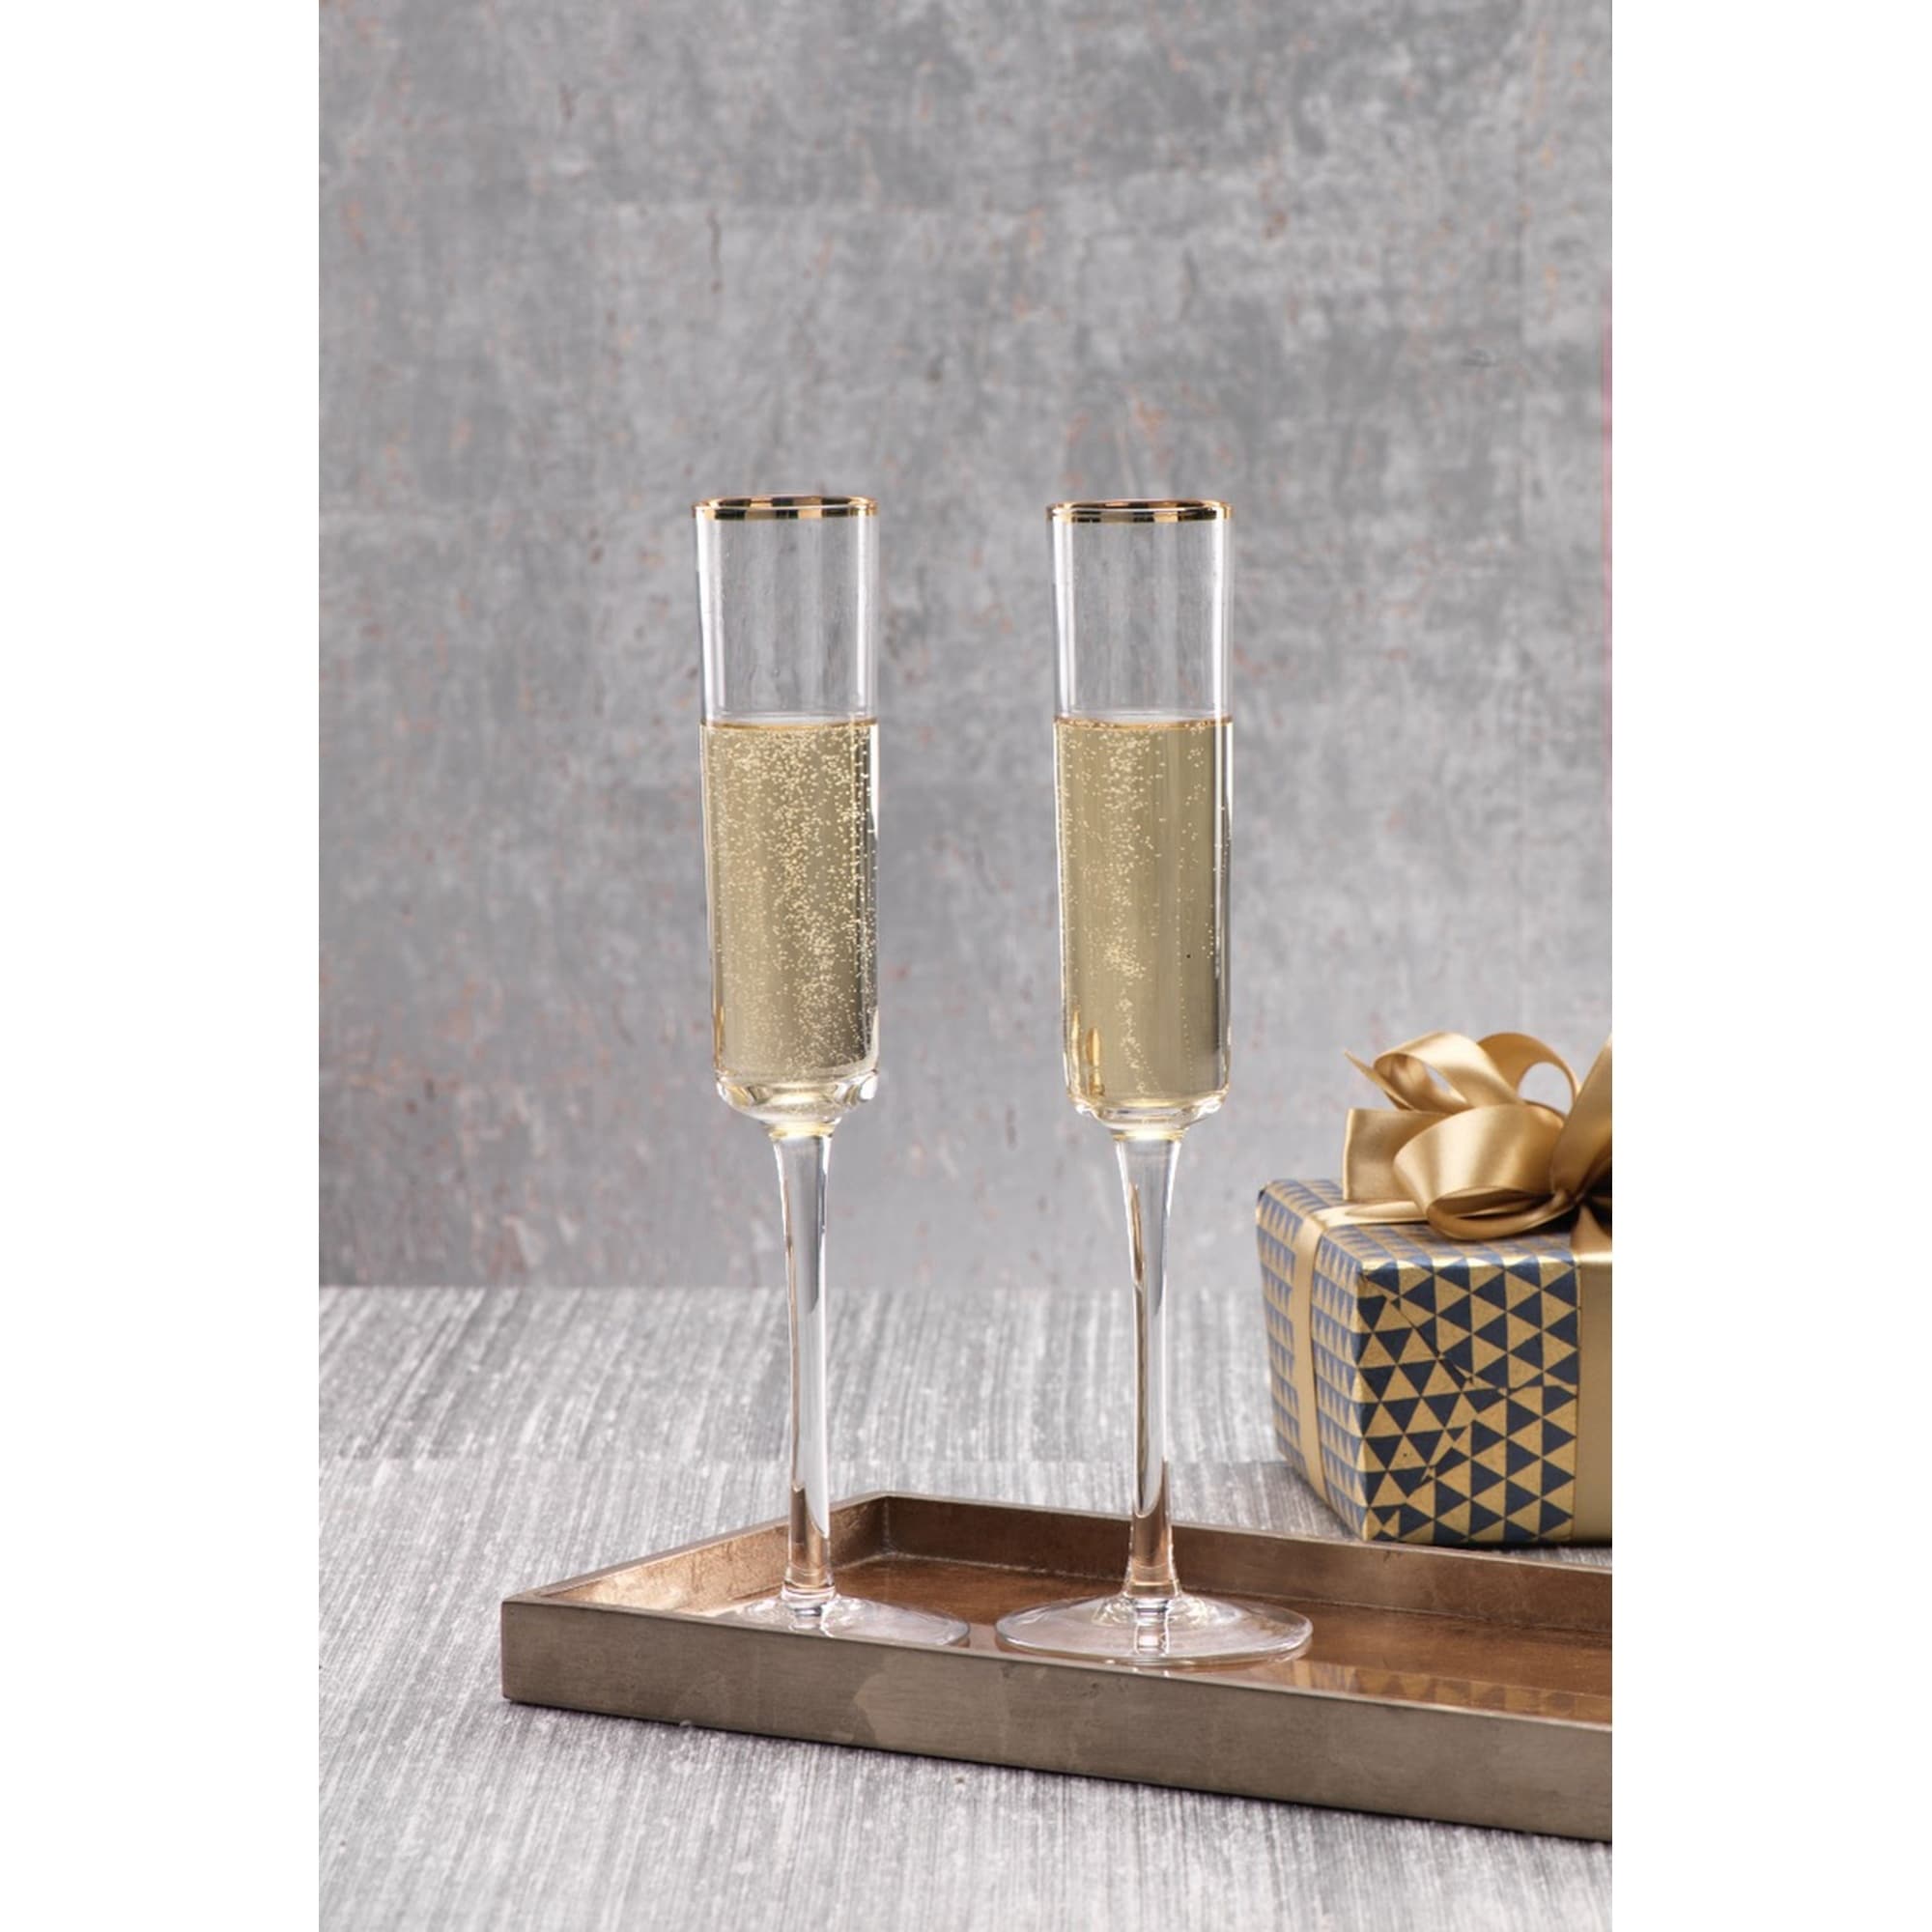 https://ak1.ostkcdn.com/images/products/16647690/Zalli-11.25-Tall-Flute-Champagne-Glass-Gold-Rim-Set-of-6-376d5379-e0bd-4b74-97dc-f29751304d83.jpg